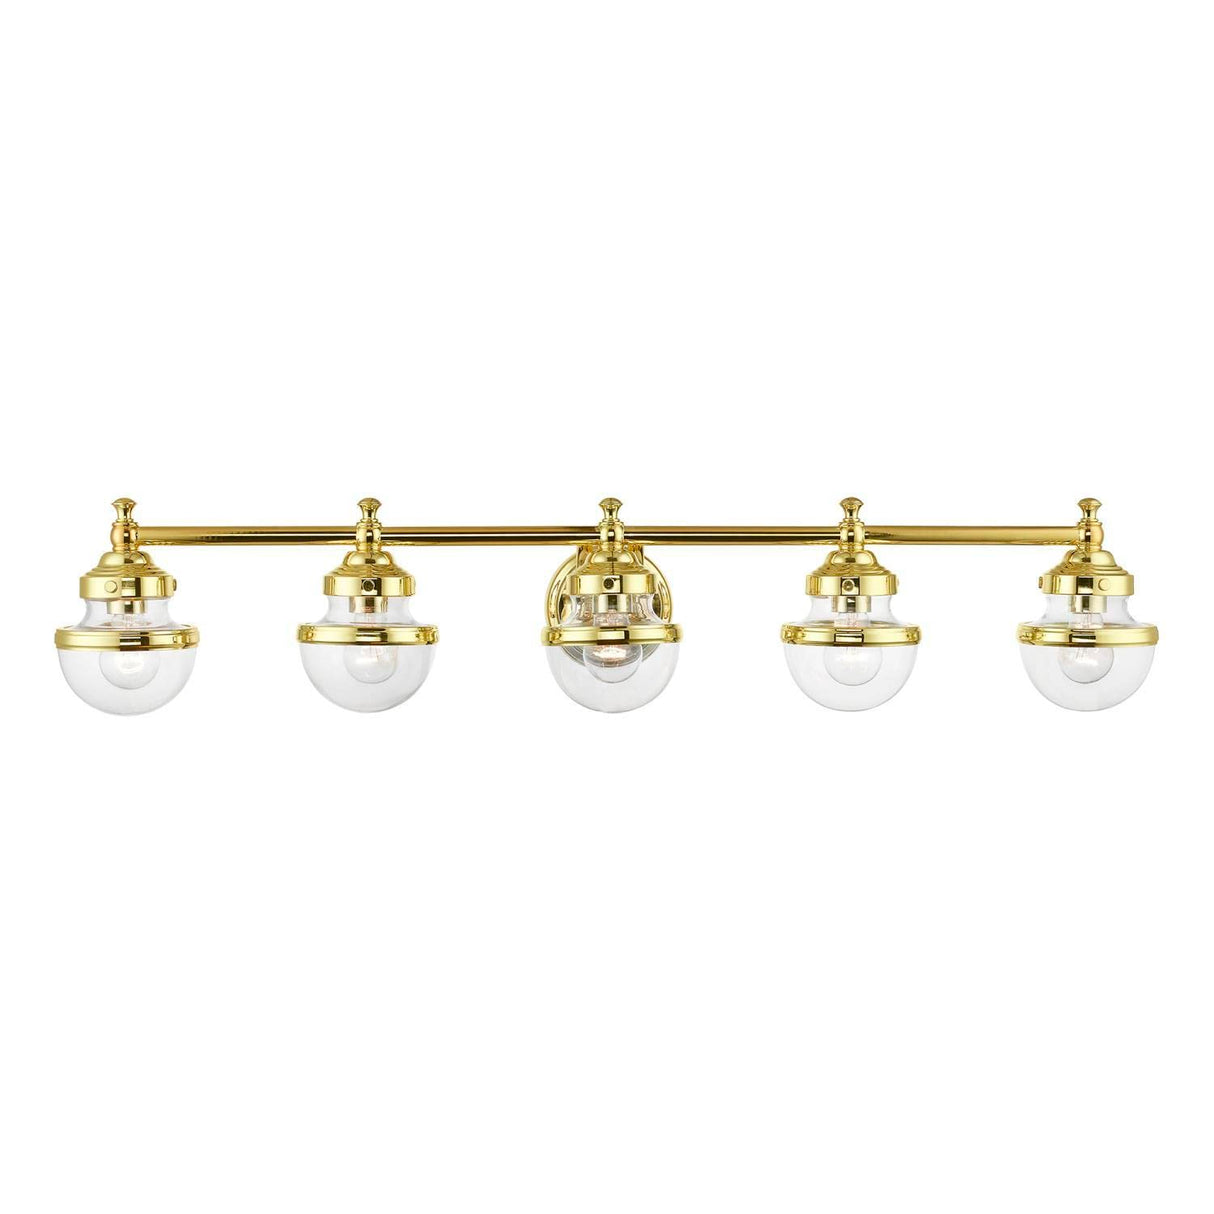 Livex Lighting 17415-02 Oldwick 5 Light 42 inch Polished Brass Vanity Sconce Wall Light, Large